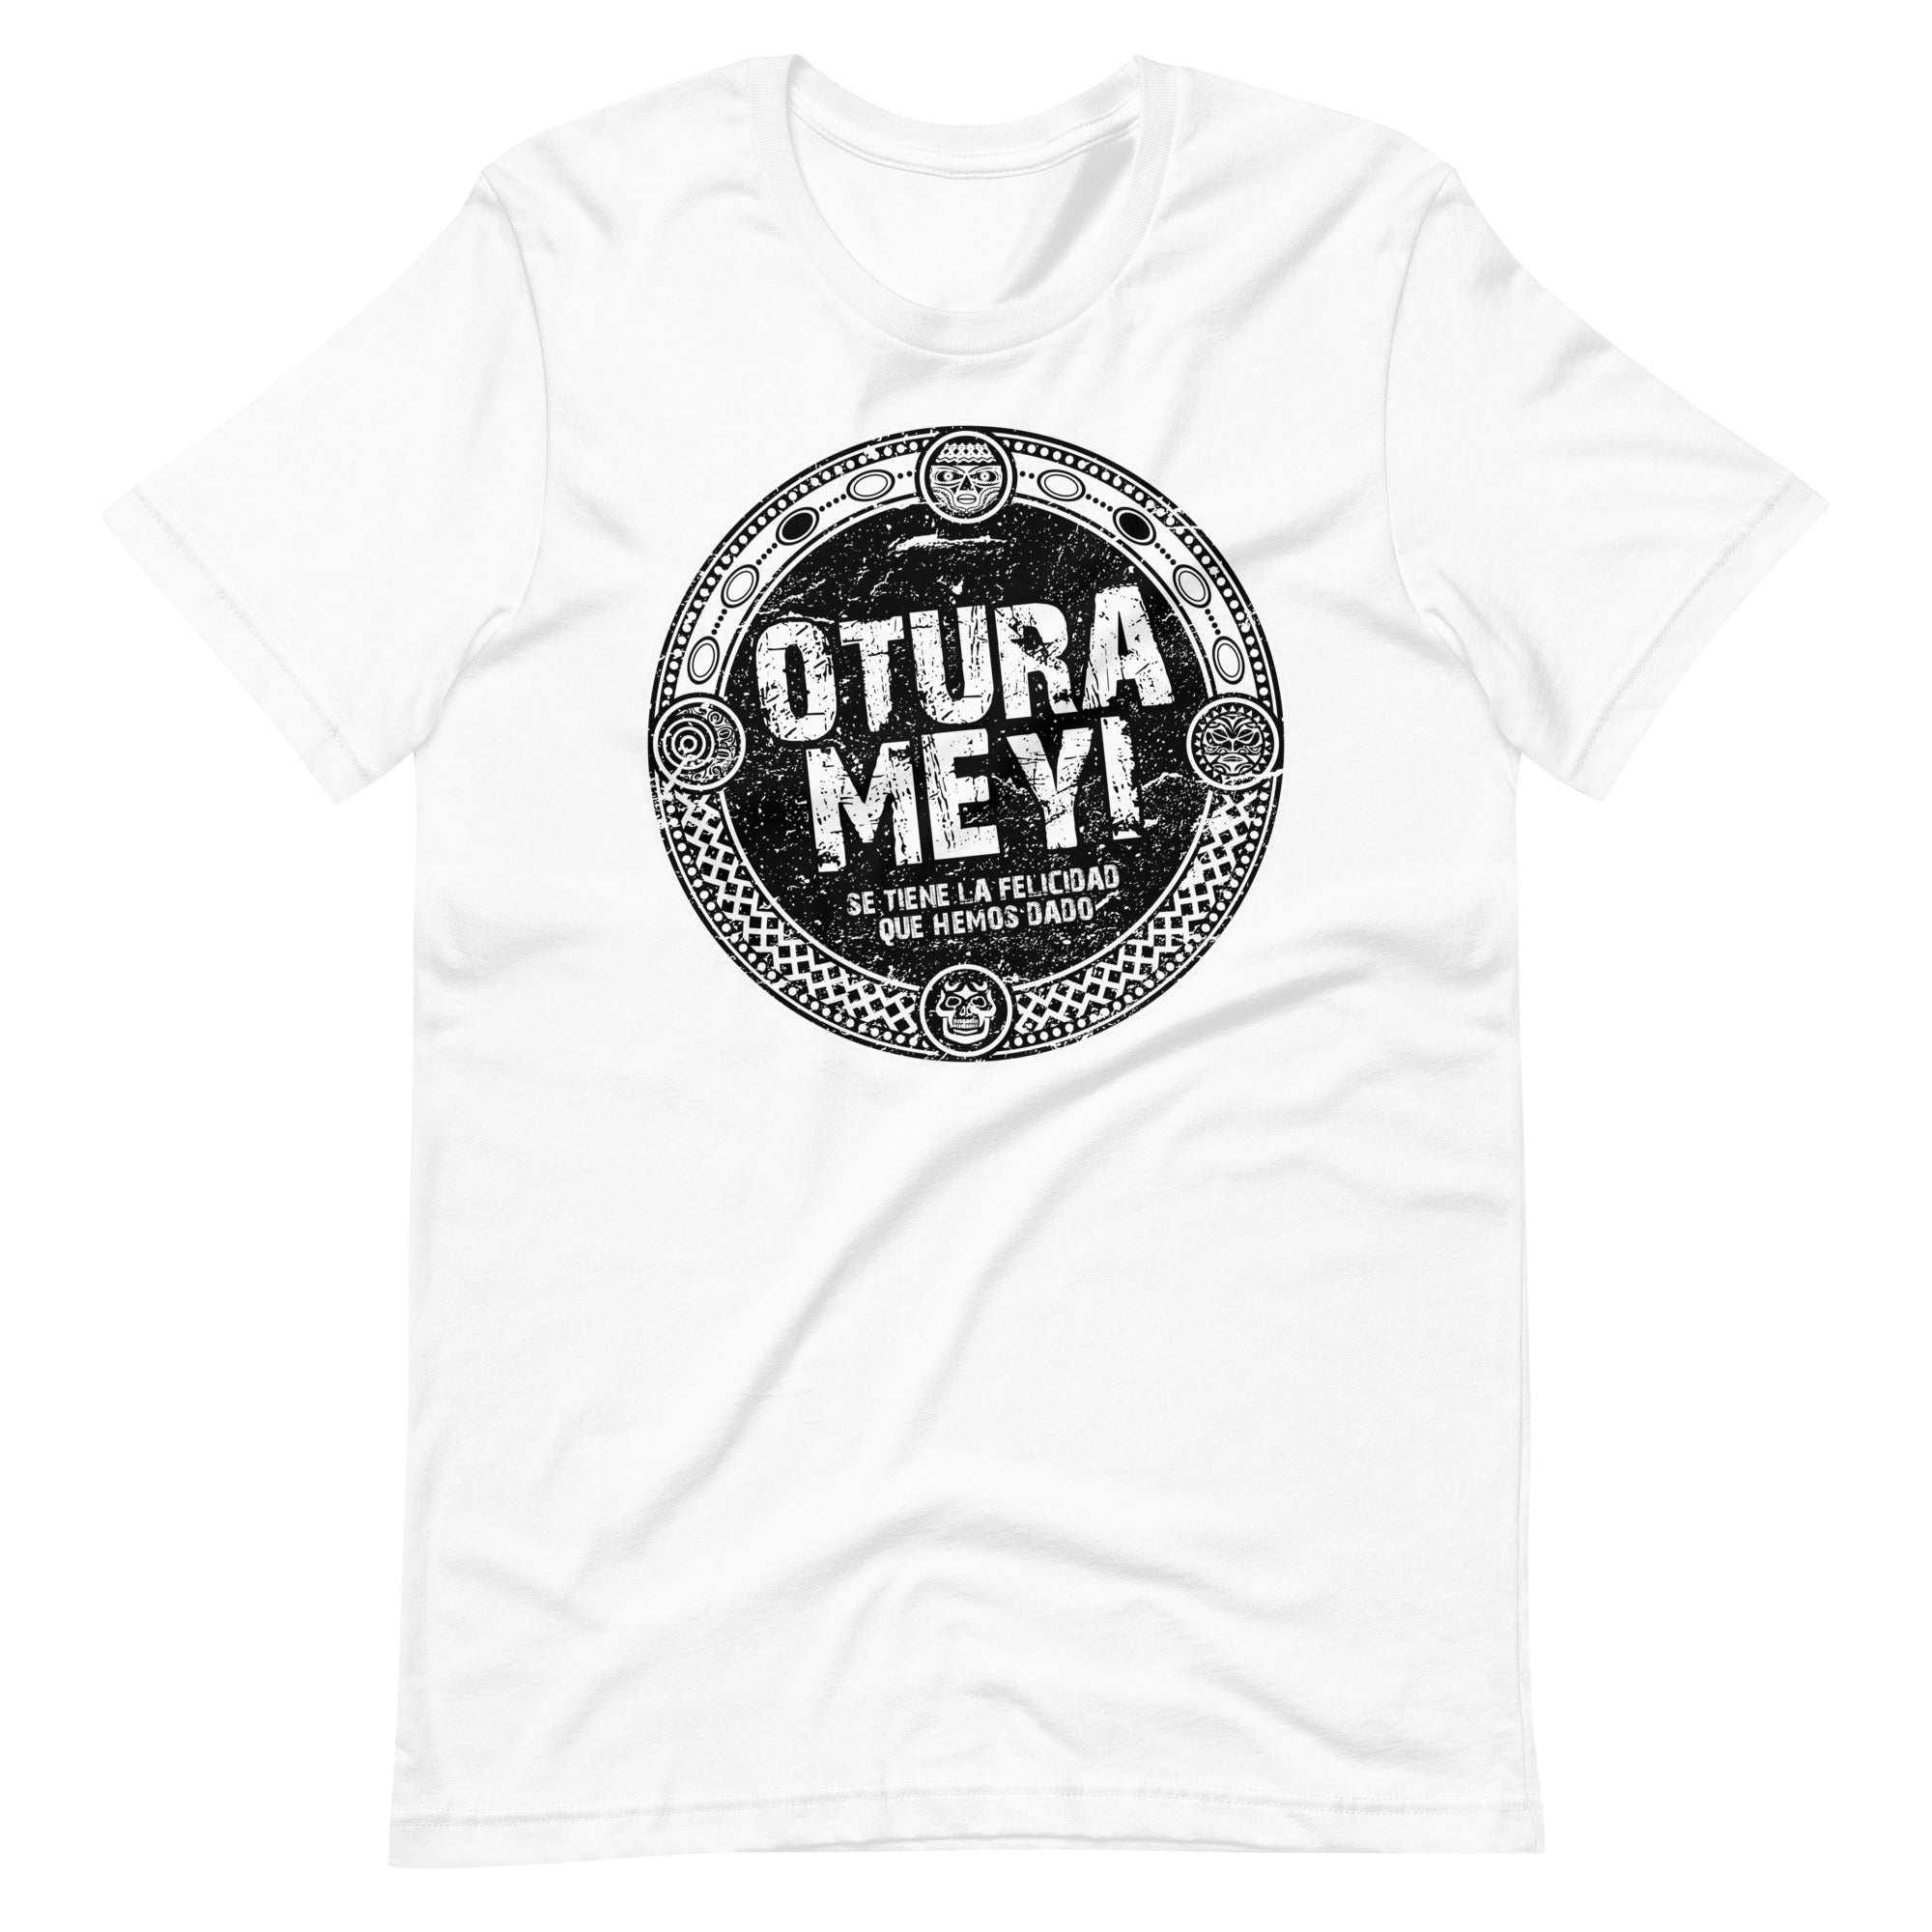 Otura Meyi | Camiseta de manga corta unisex